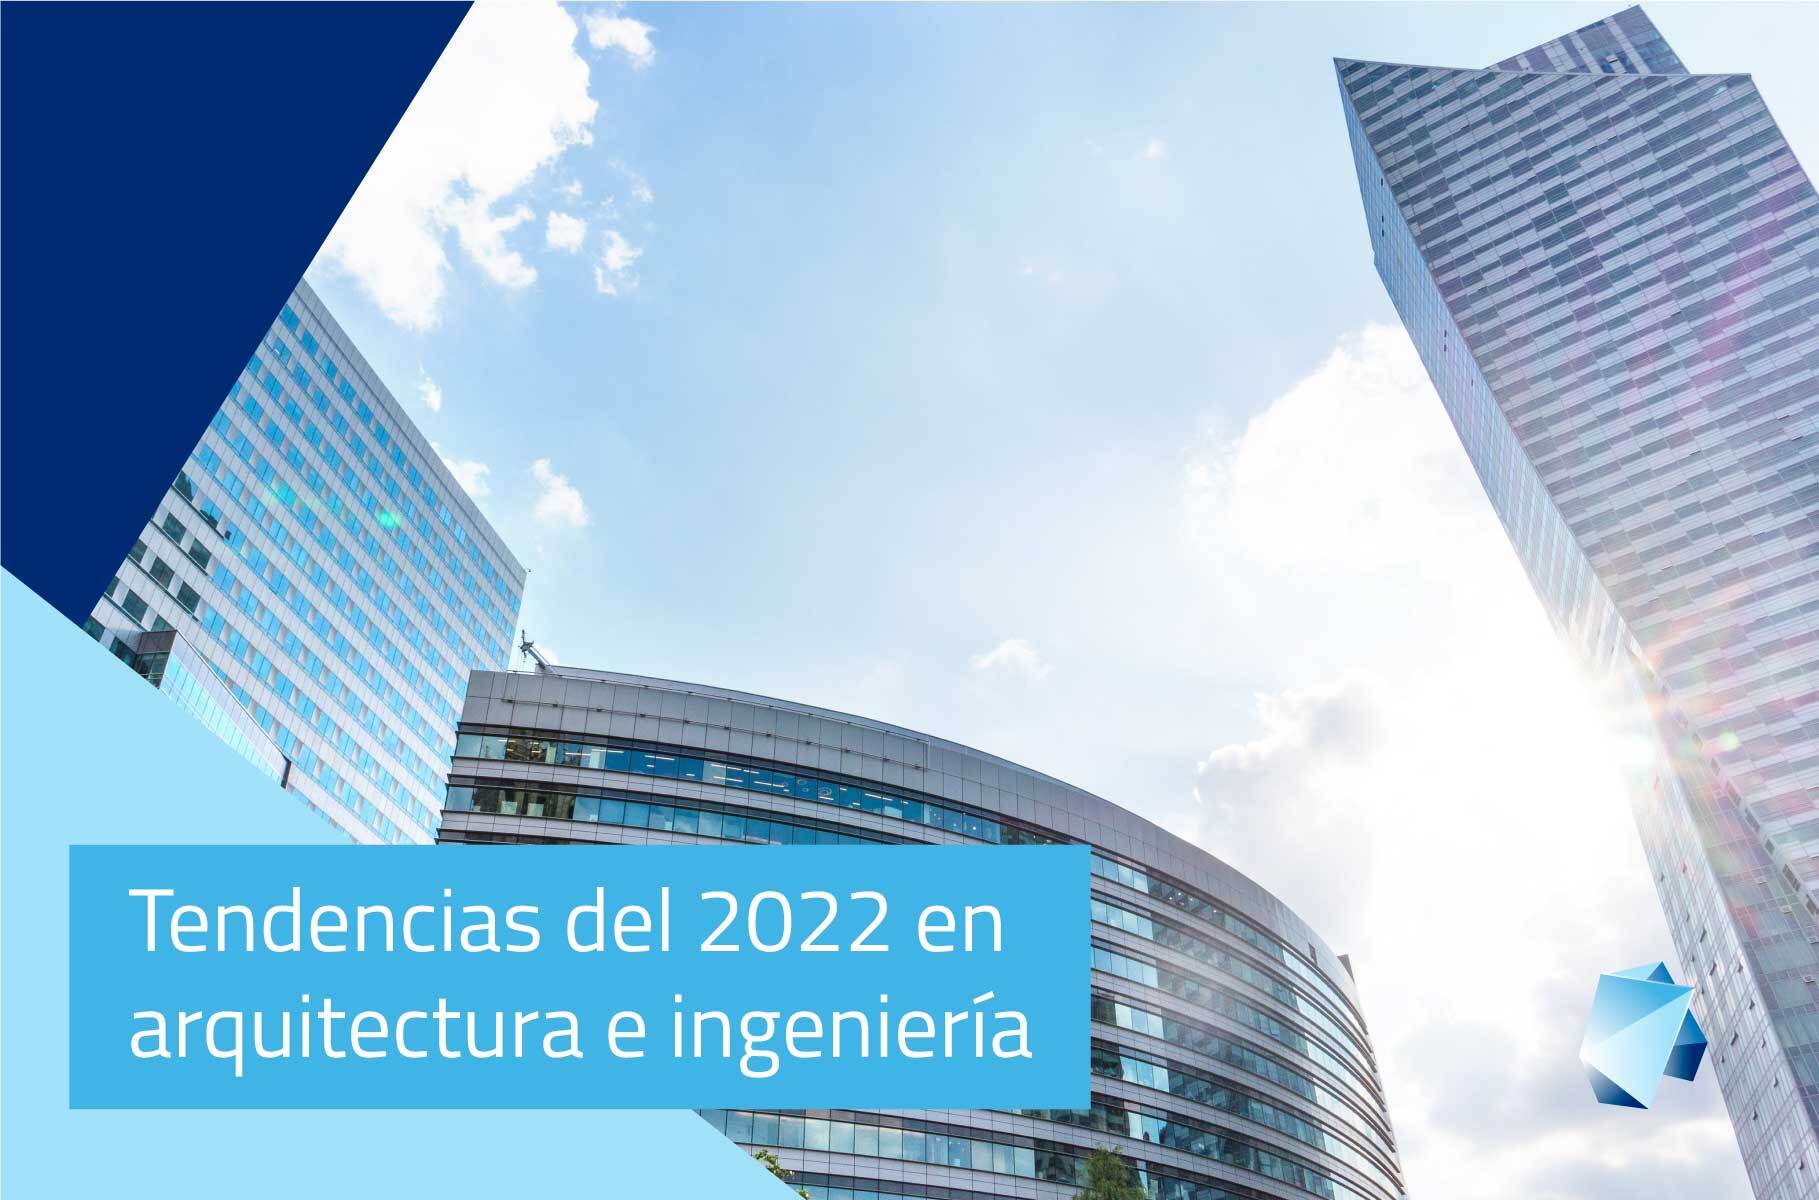 Tendencias BIM del 2022 en arquitectura e ingenieria